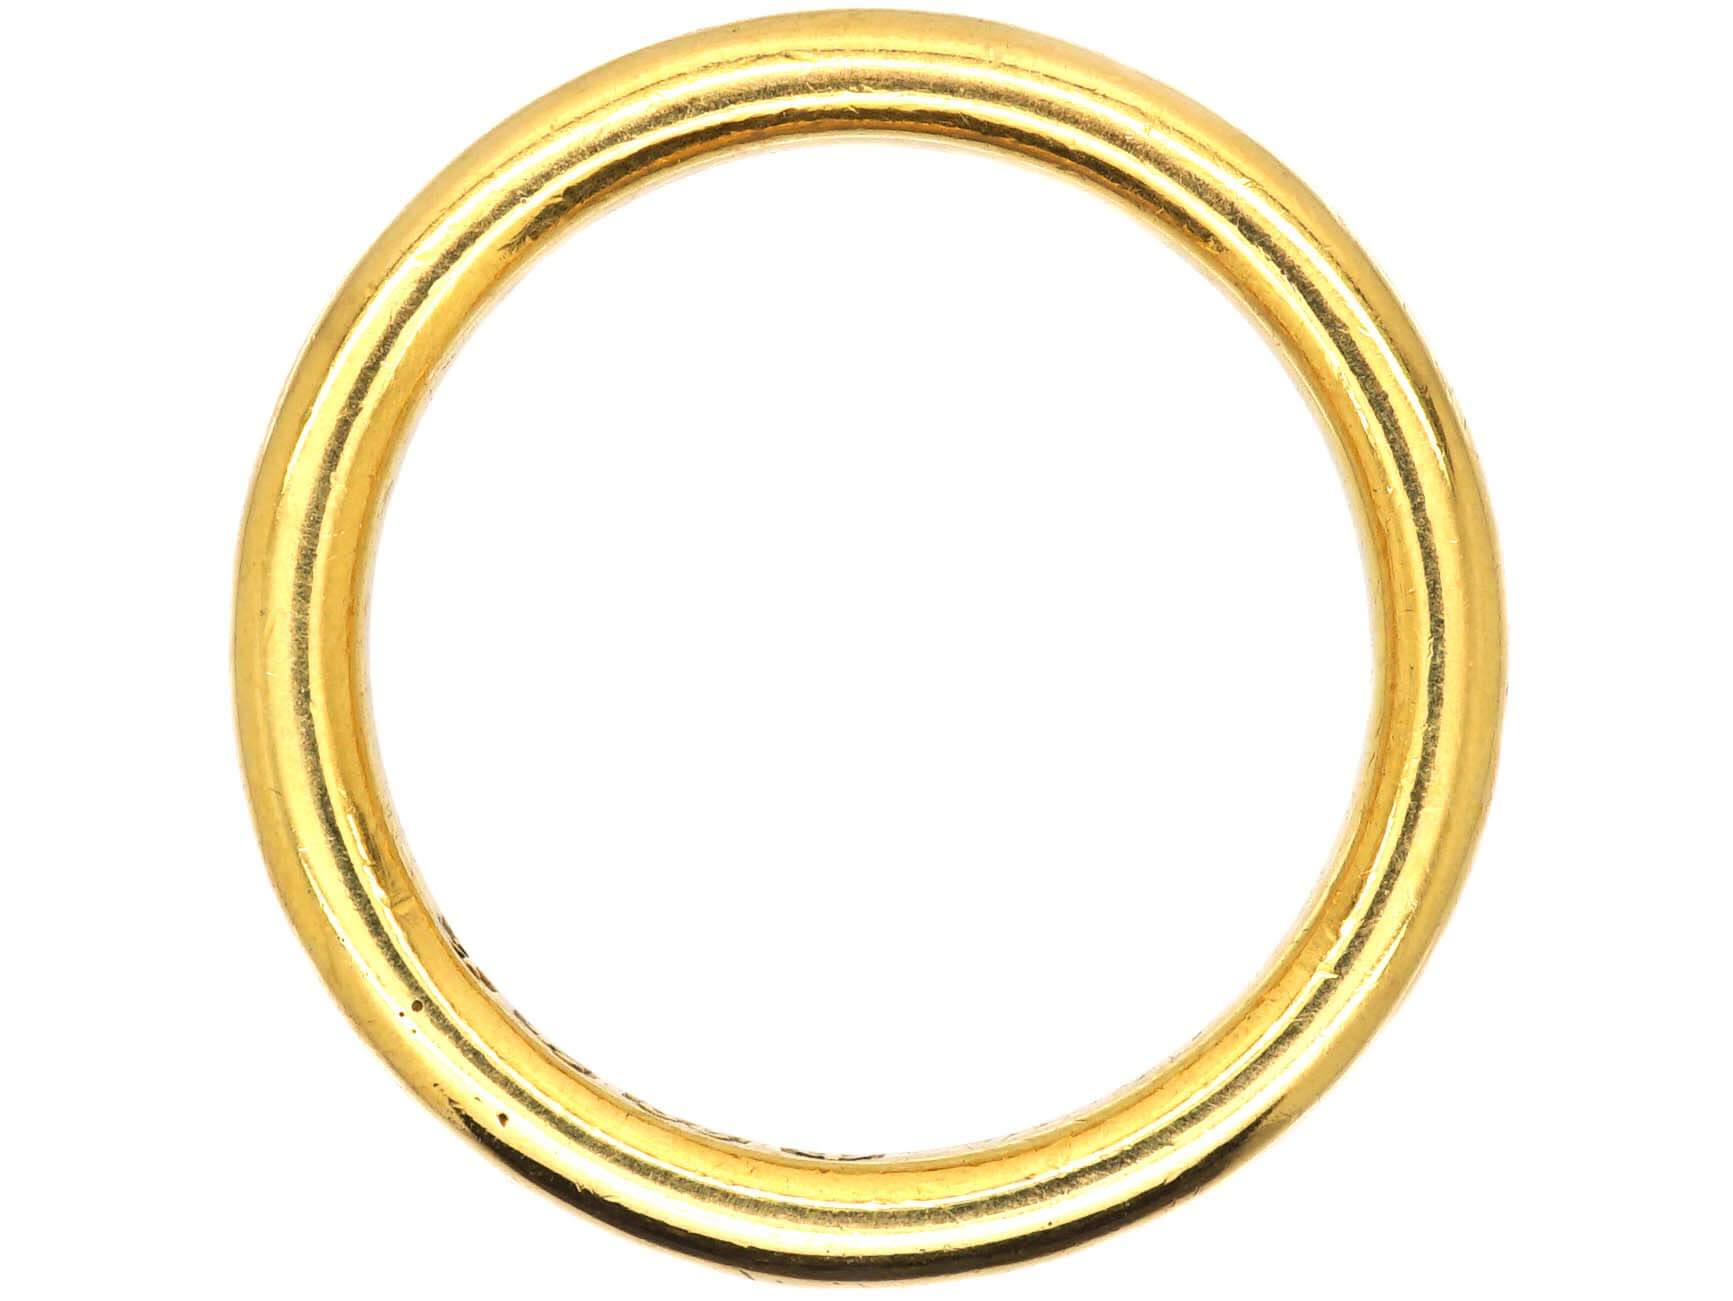 Edwardian 22ct Gold Wedding Ring Assayed in 1918 (111U) | The Antique ...